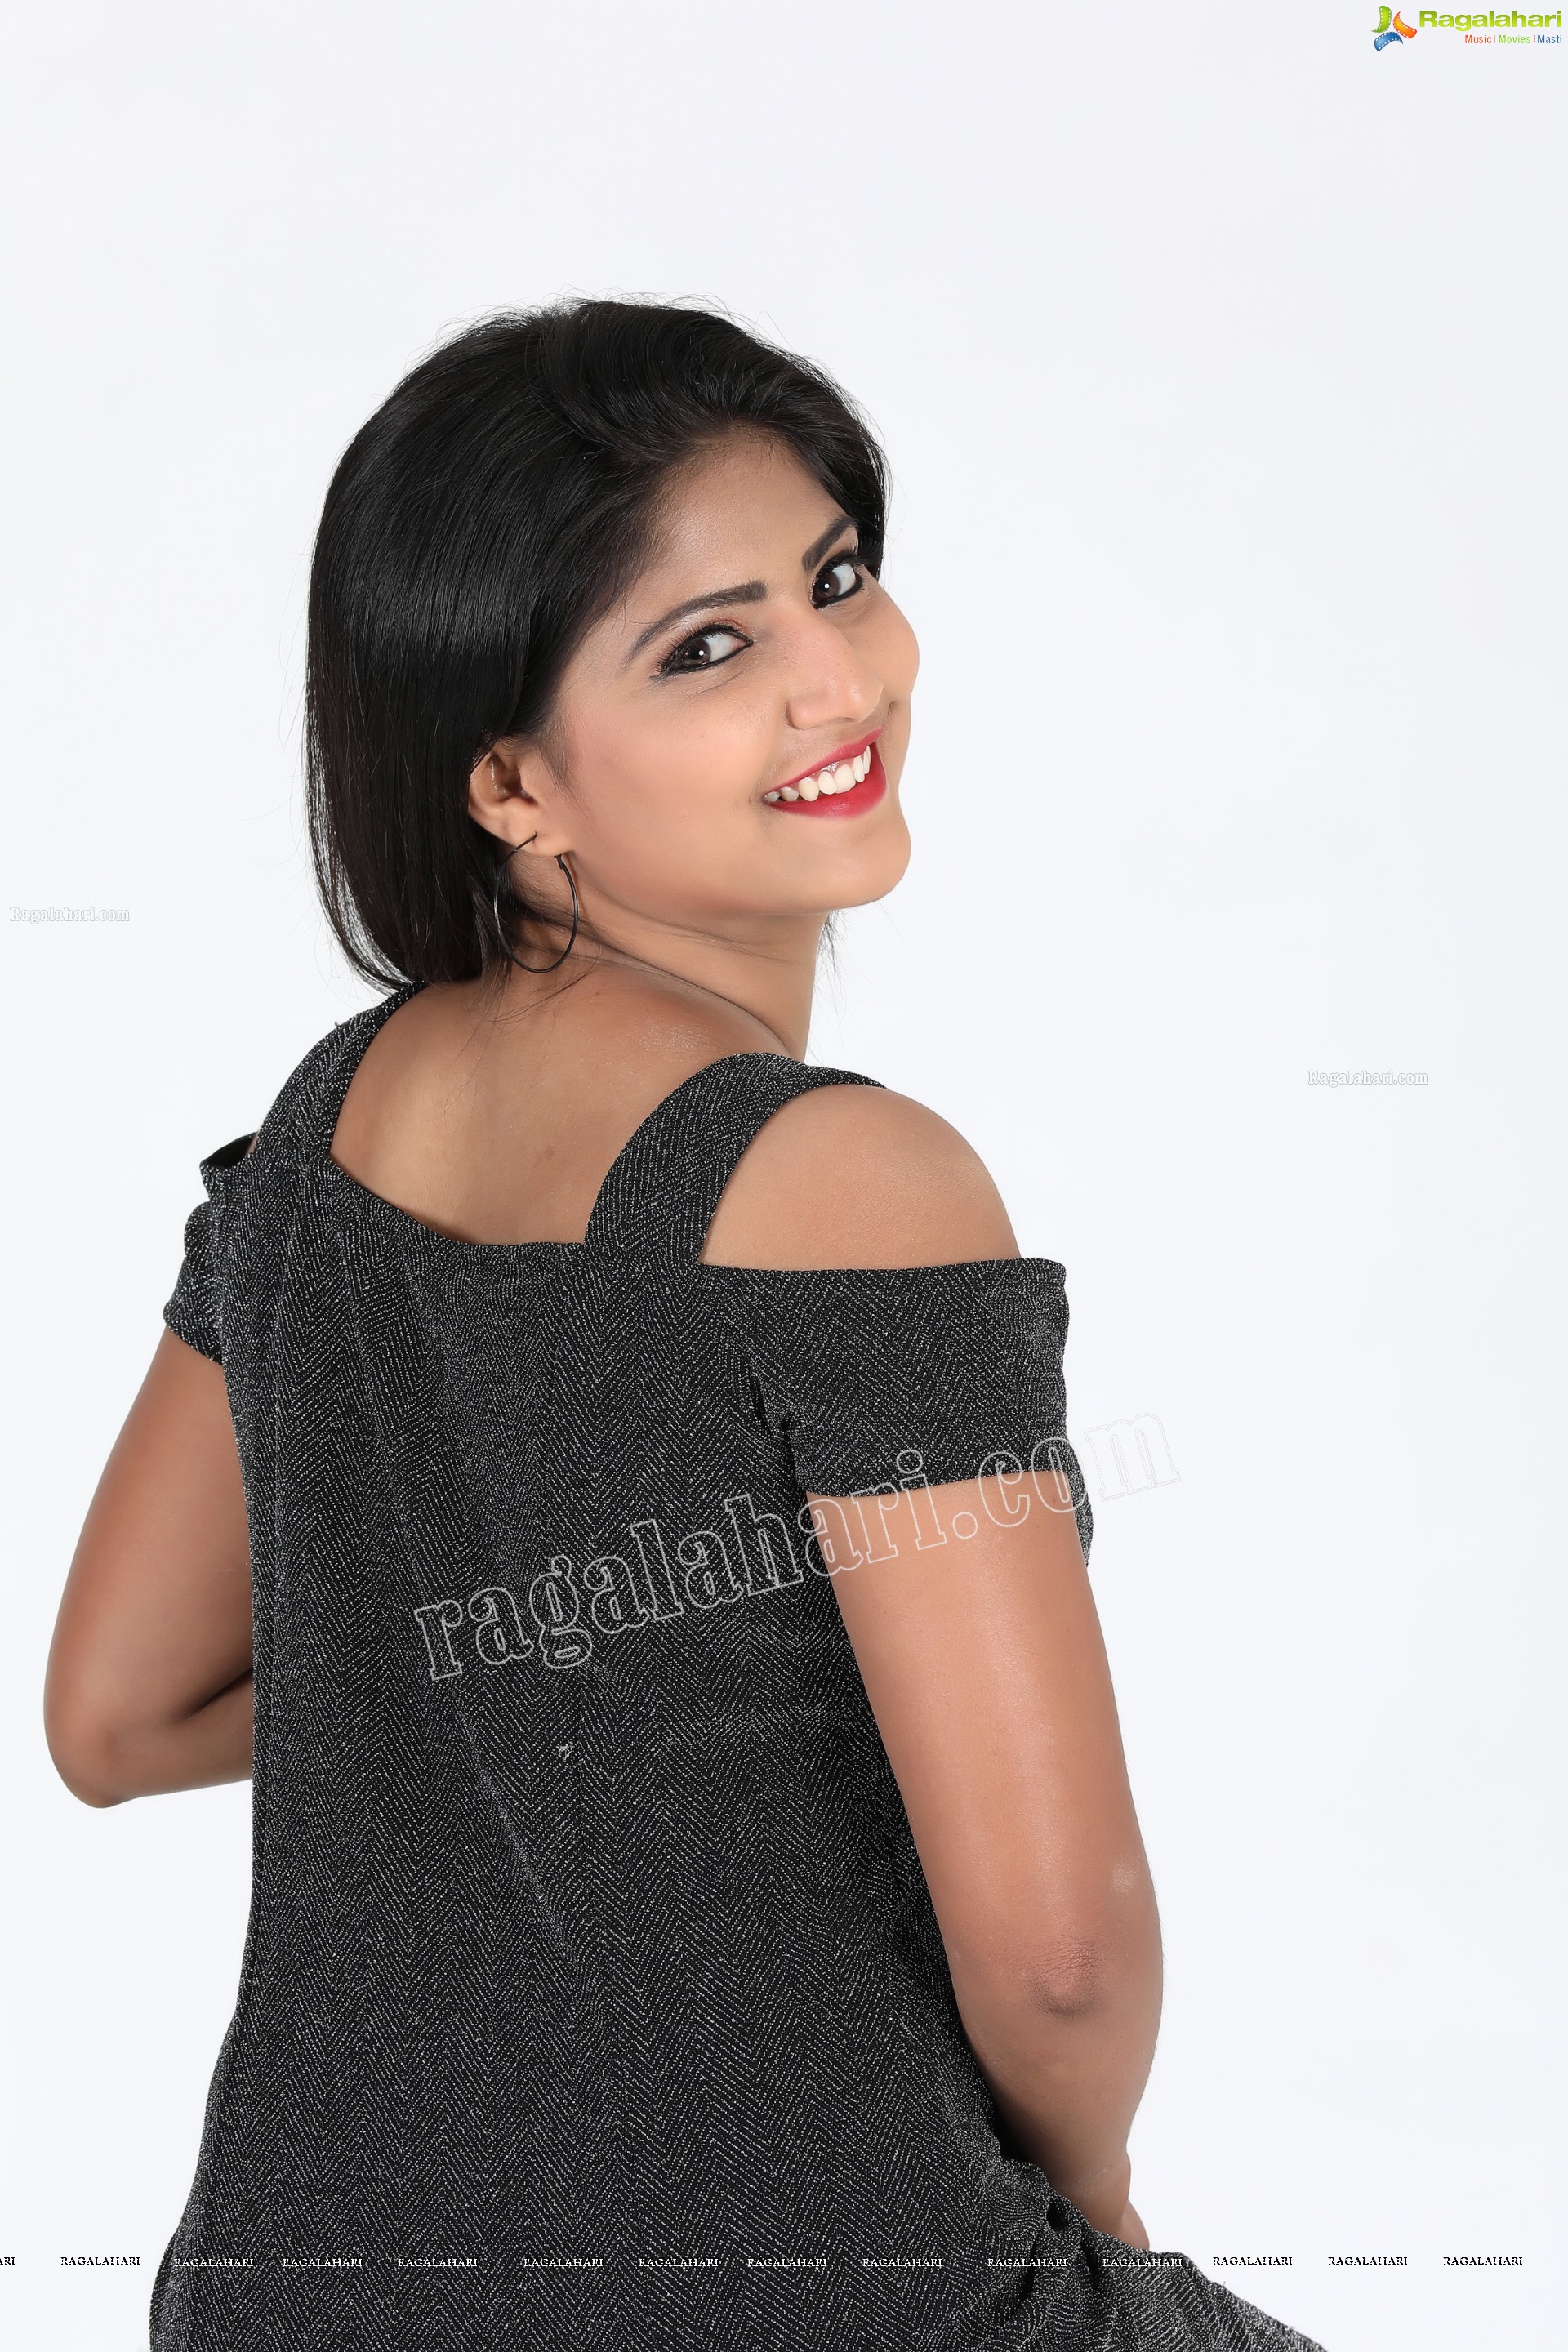 Shabeena Shaik in Carbon Black Bodycon Dress Exclusive Photo Shoot